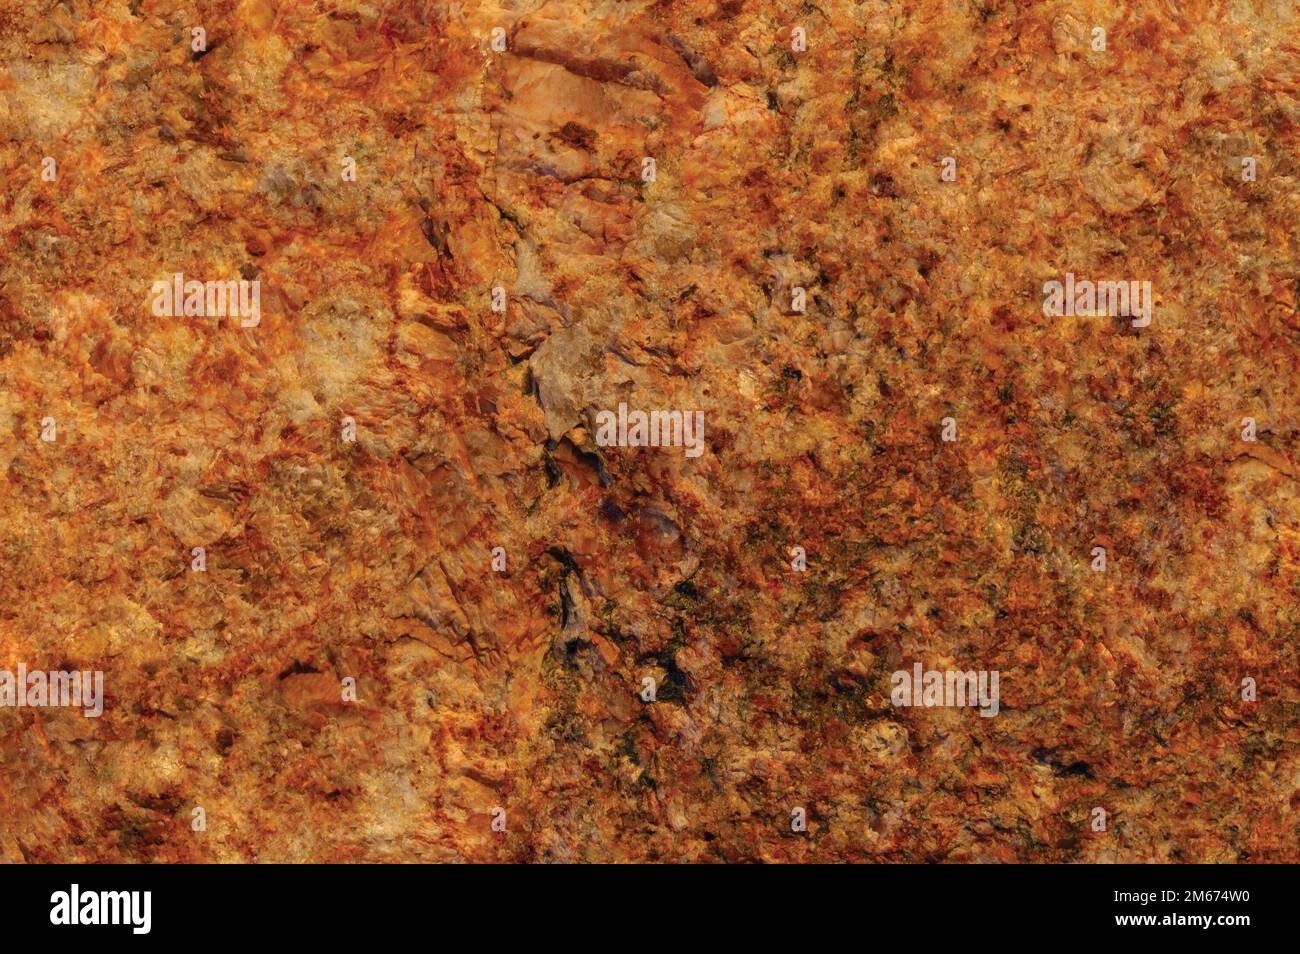 Raw pegmatite feldspar igneous rock terracotta pattern, rusty orange red golden amber yellow horizontal background, coarse light crystals  texture Stock Photo